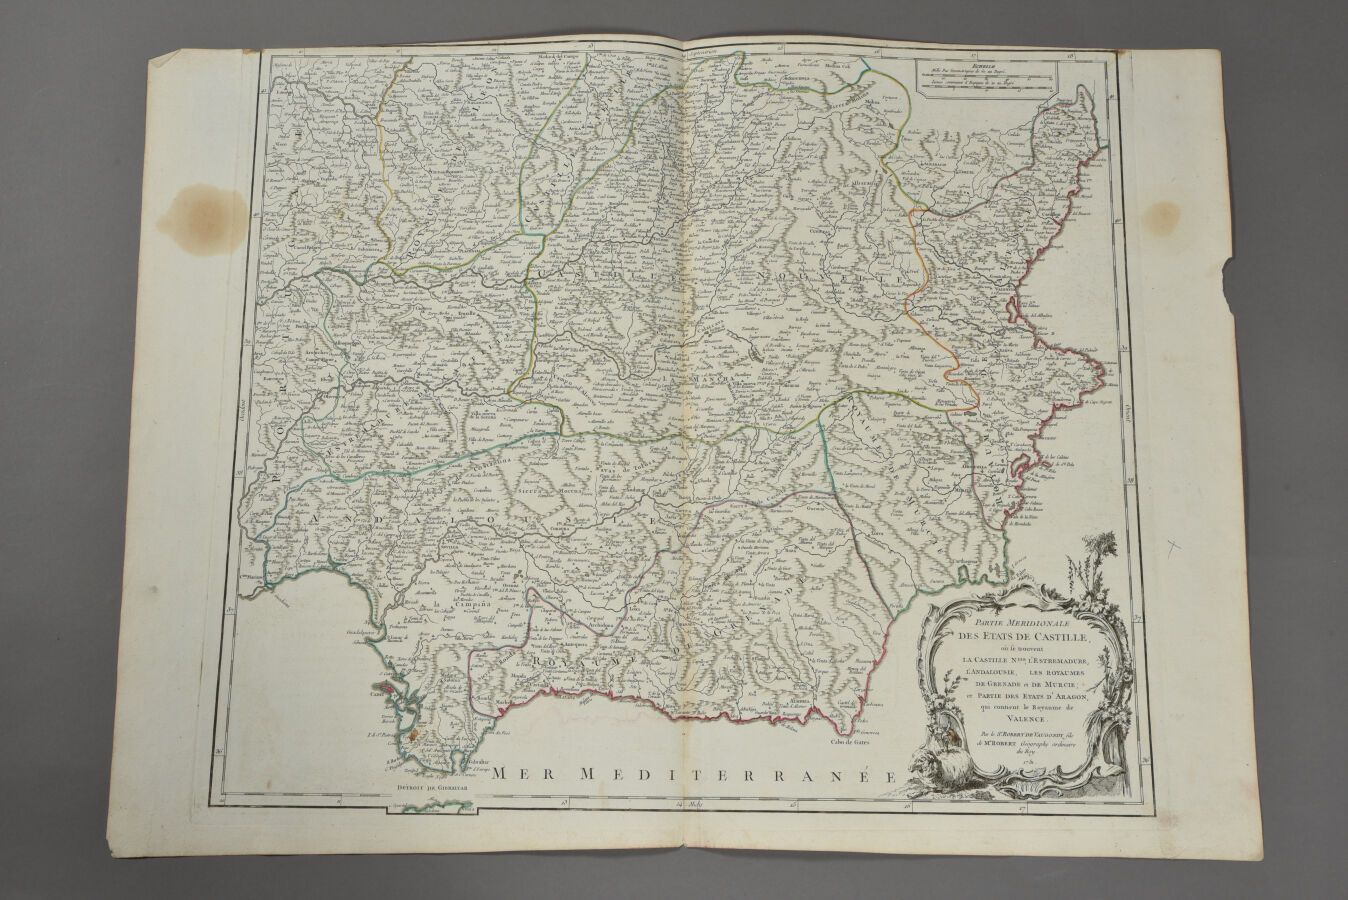 Null 罗伯特-德-沃贡迪 
(法国，18世纪)
卡斯蒂利亚州的地图。1751.
双开本。 
页边有粗大的污渍。